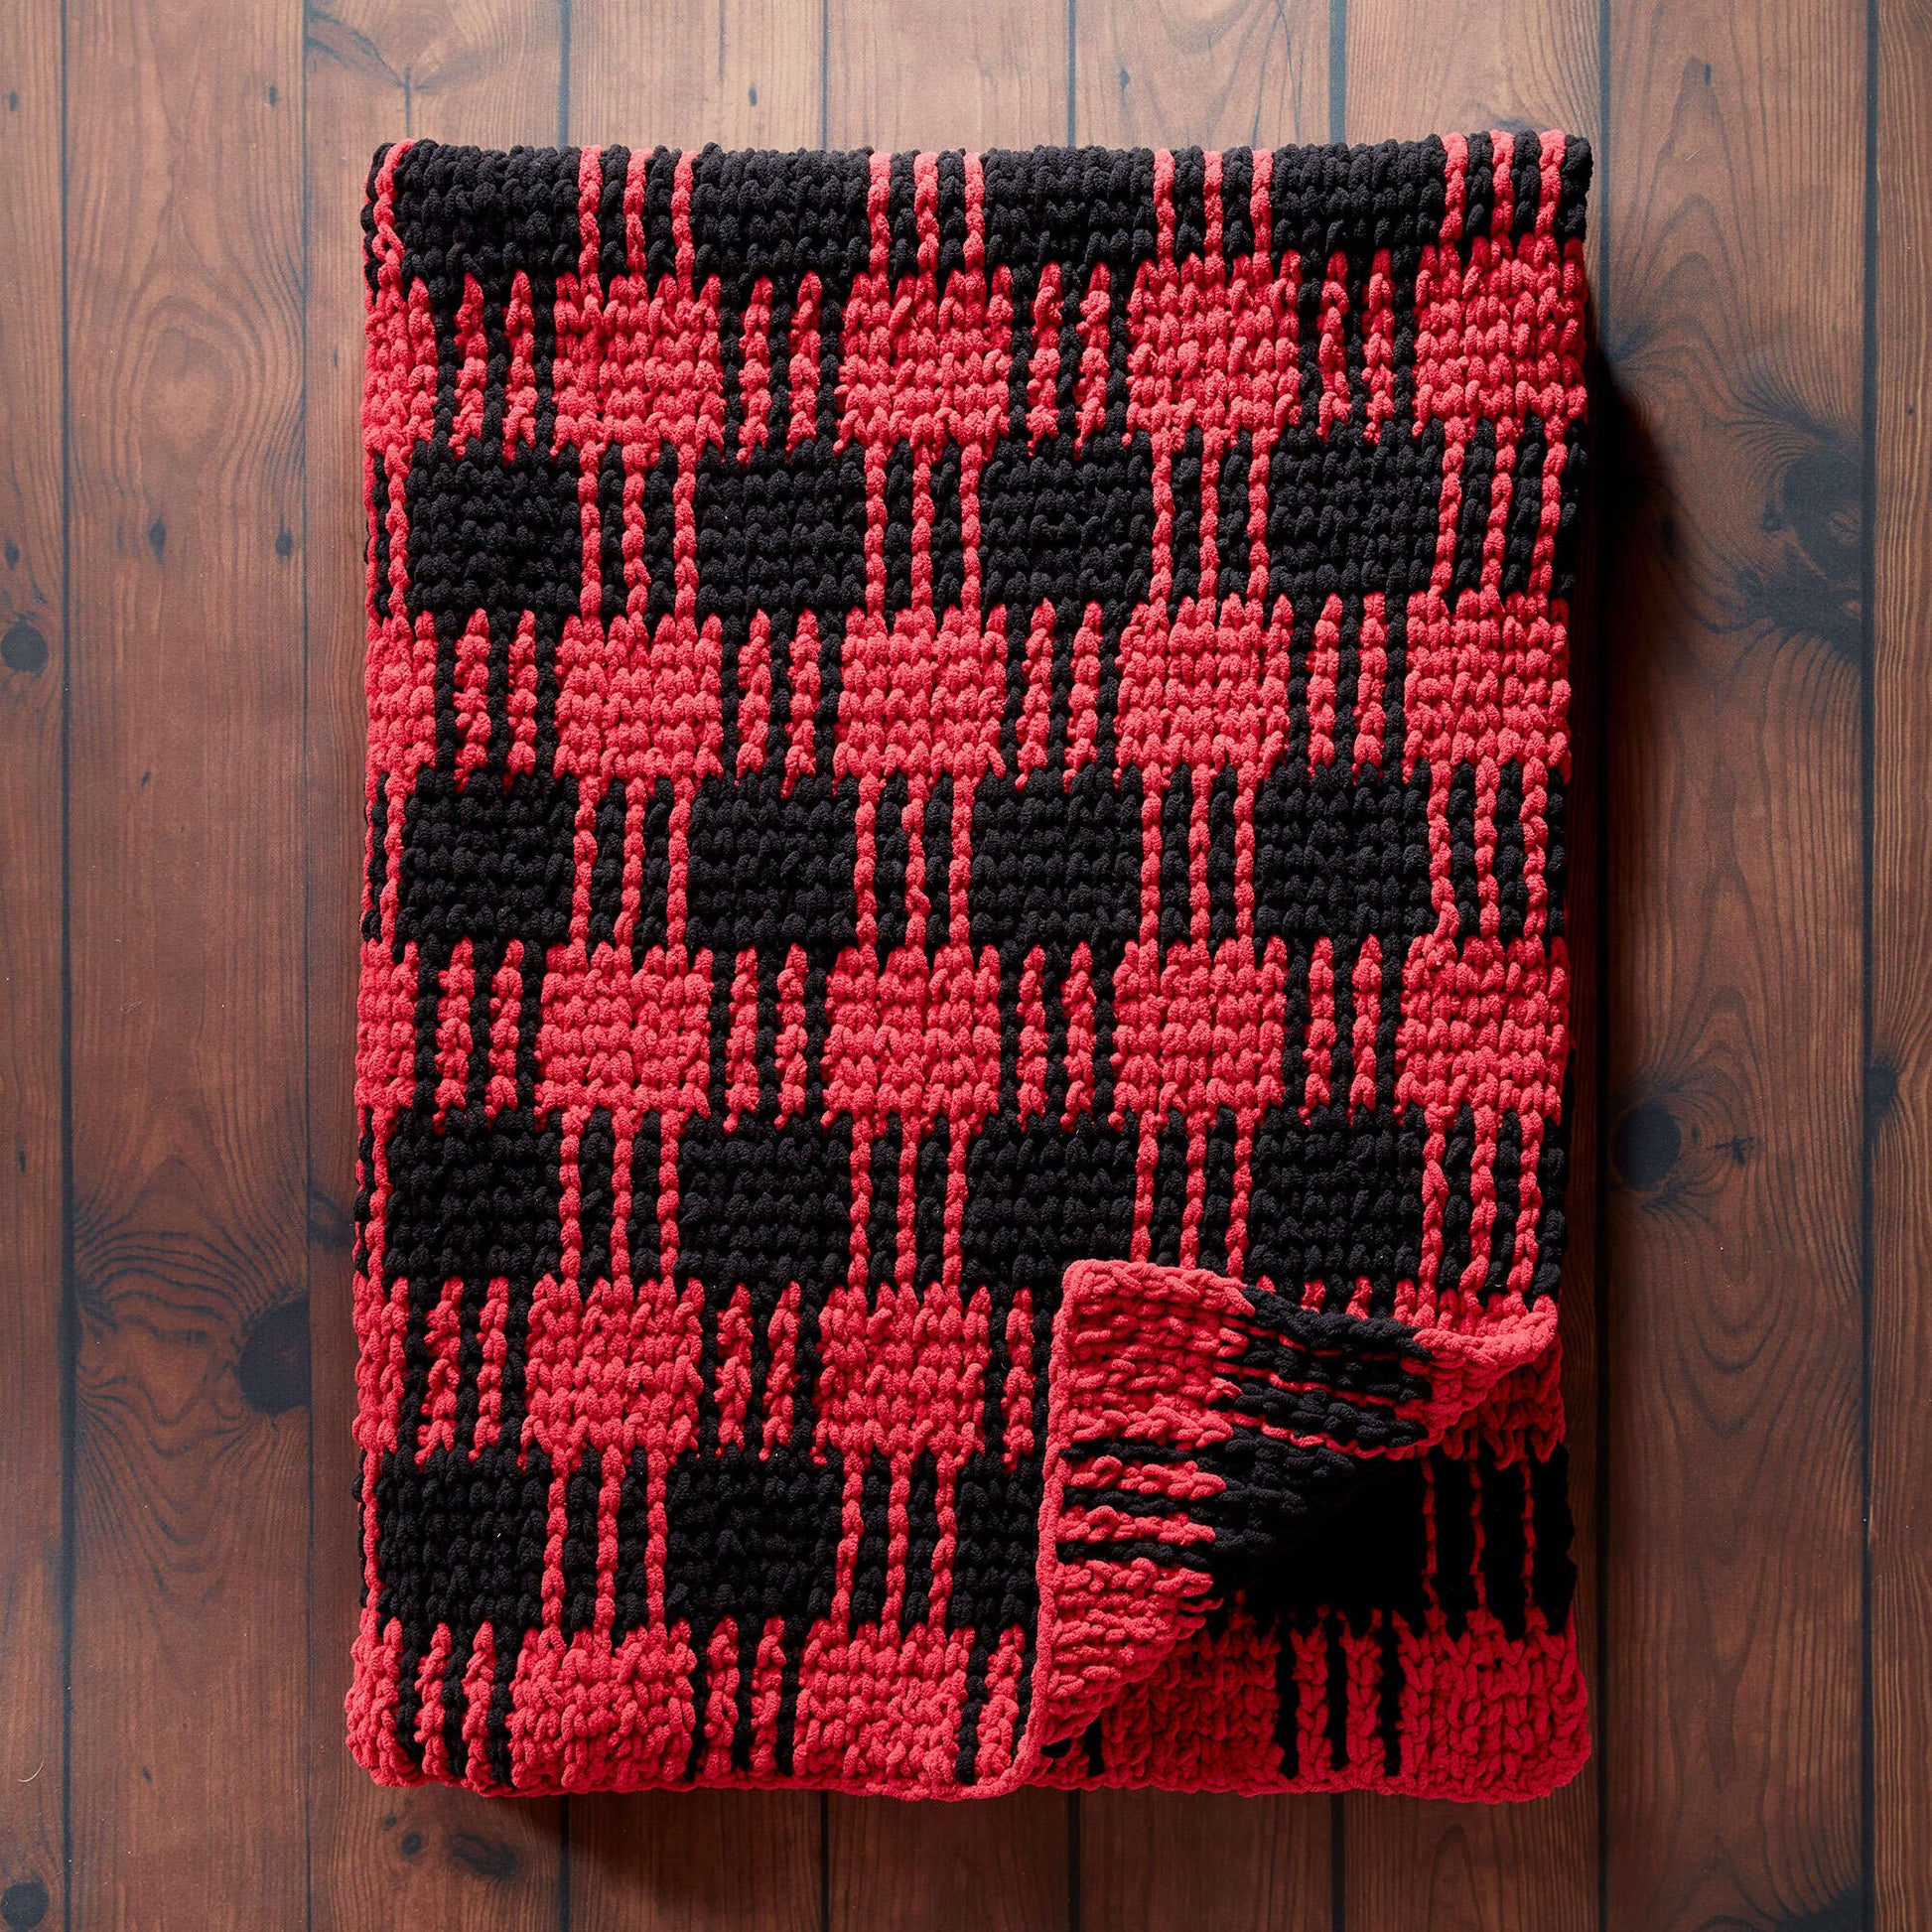 Bernat Crochet Buffalo Plaid Afghan Crochet Blanket made in Bernat Blanket yarn